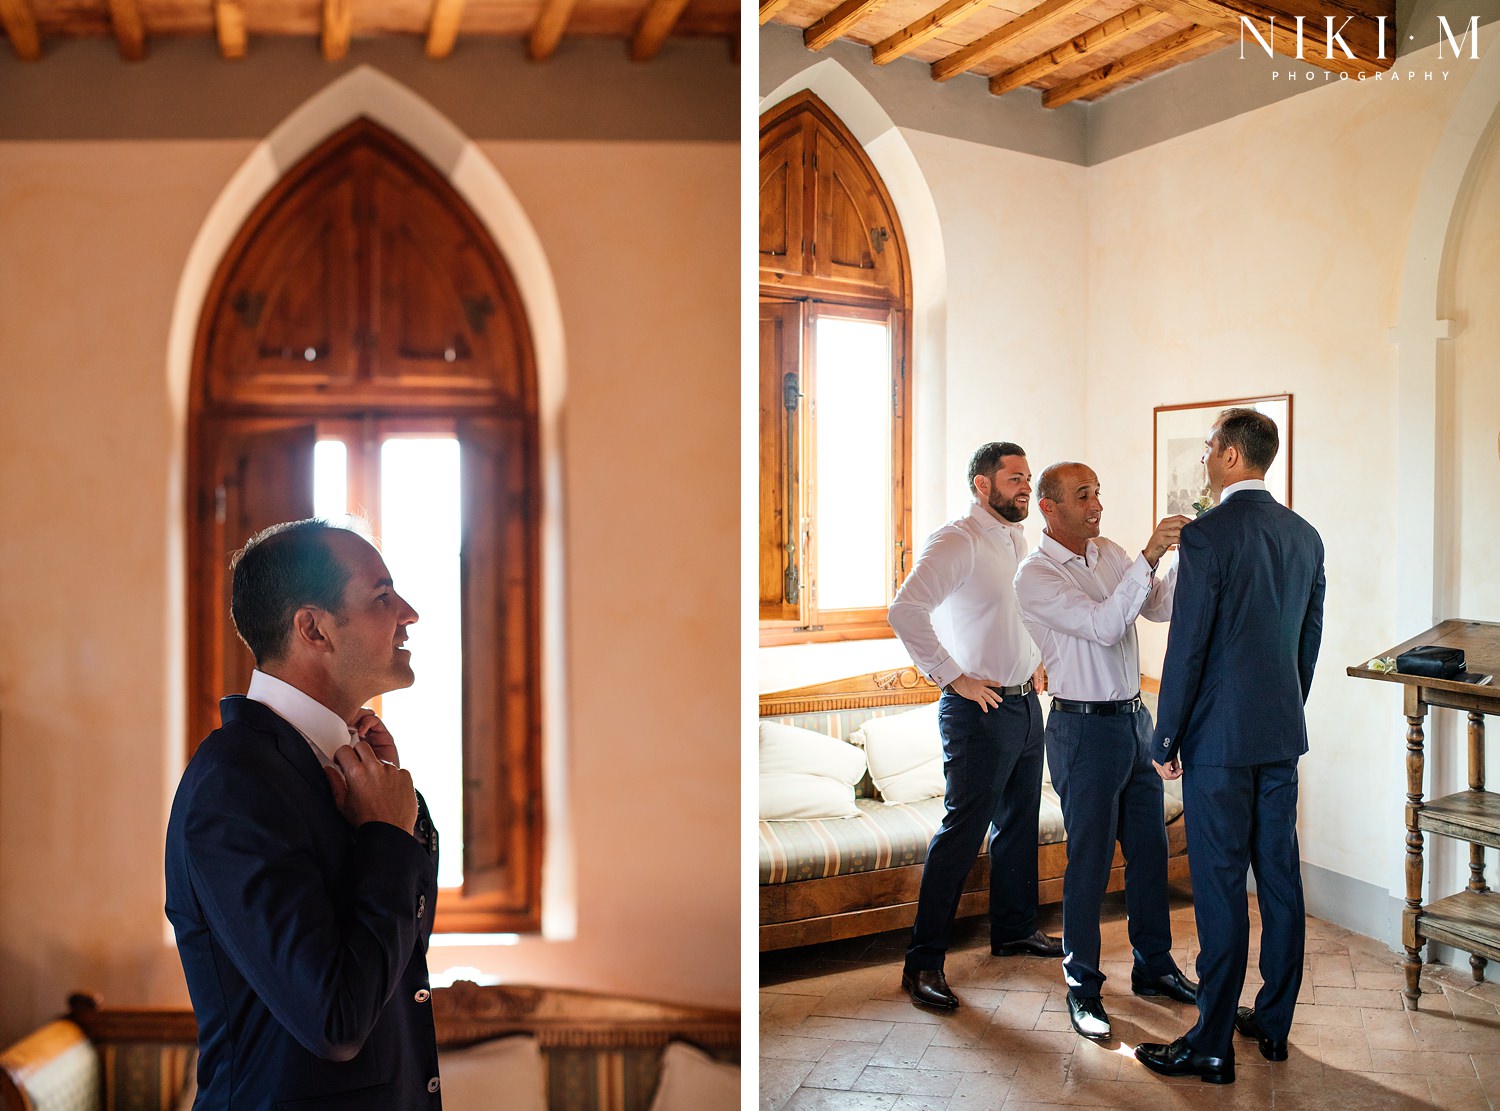 A groom gets ready before the big day at his Tuscany wedding venue, Villa Ricrio